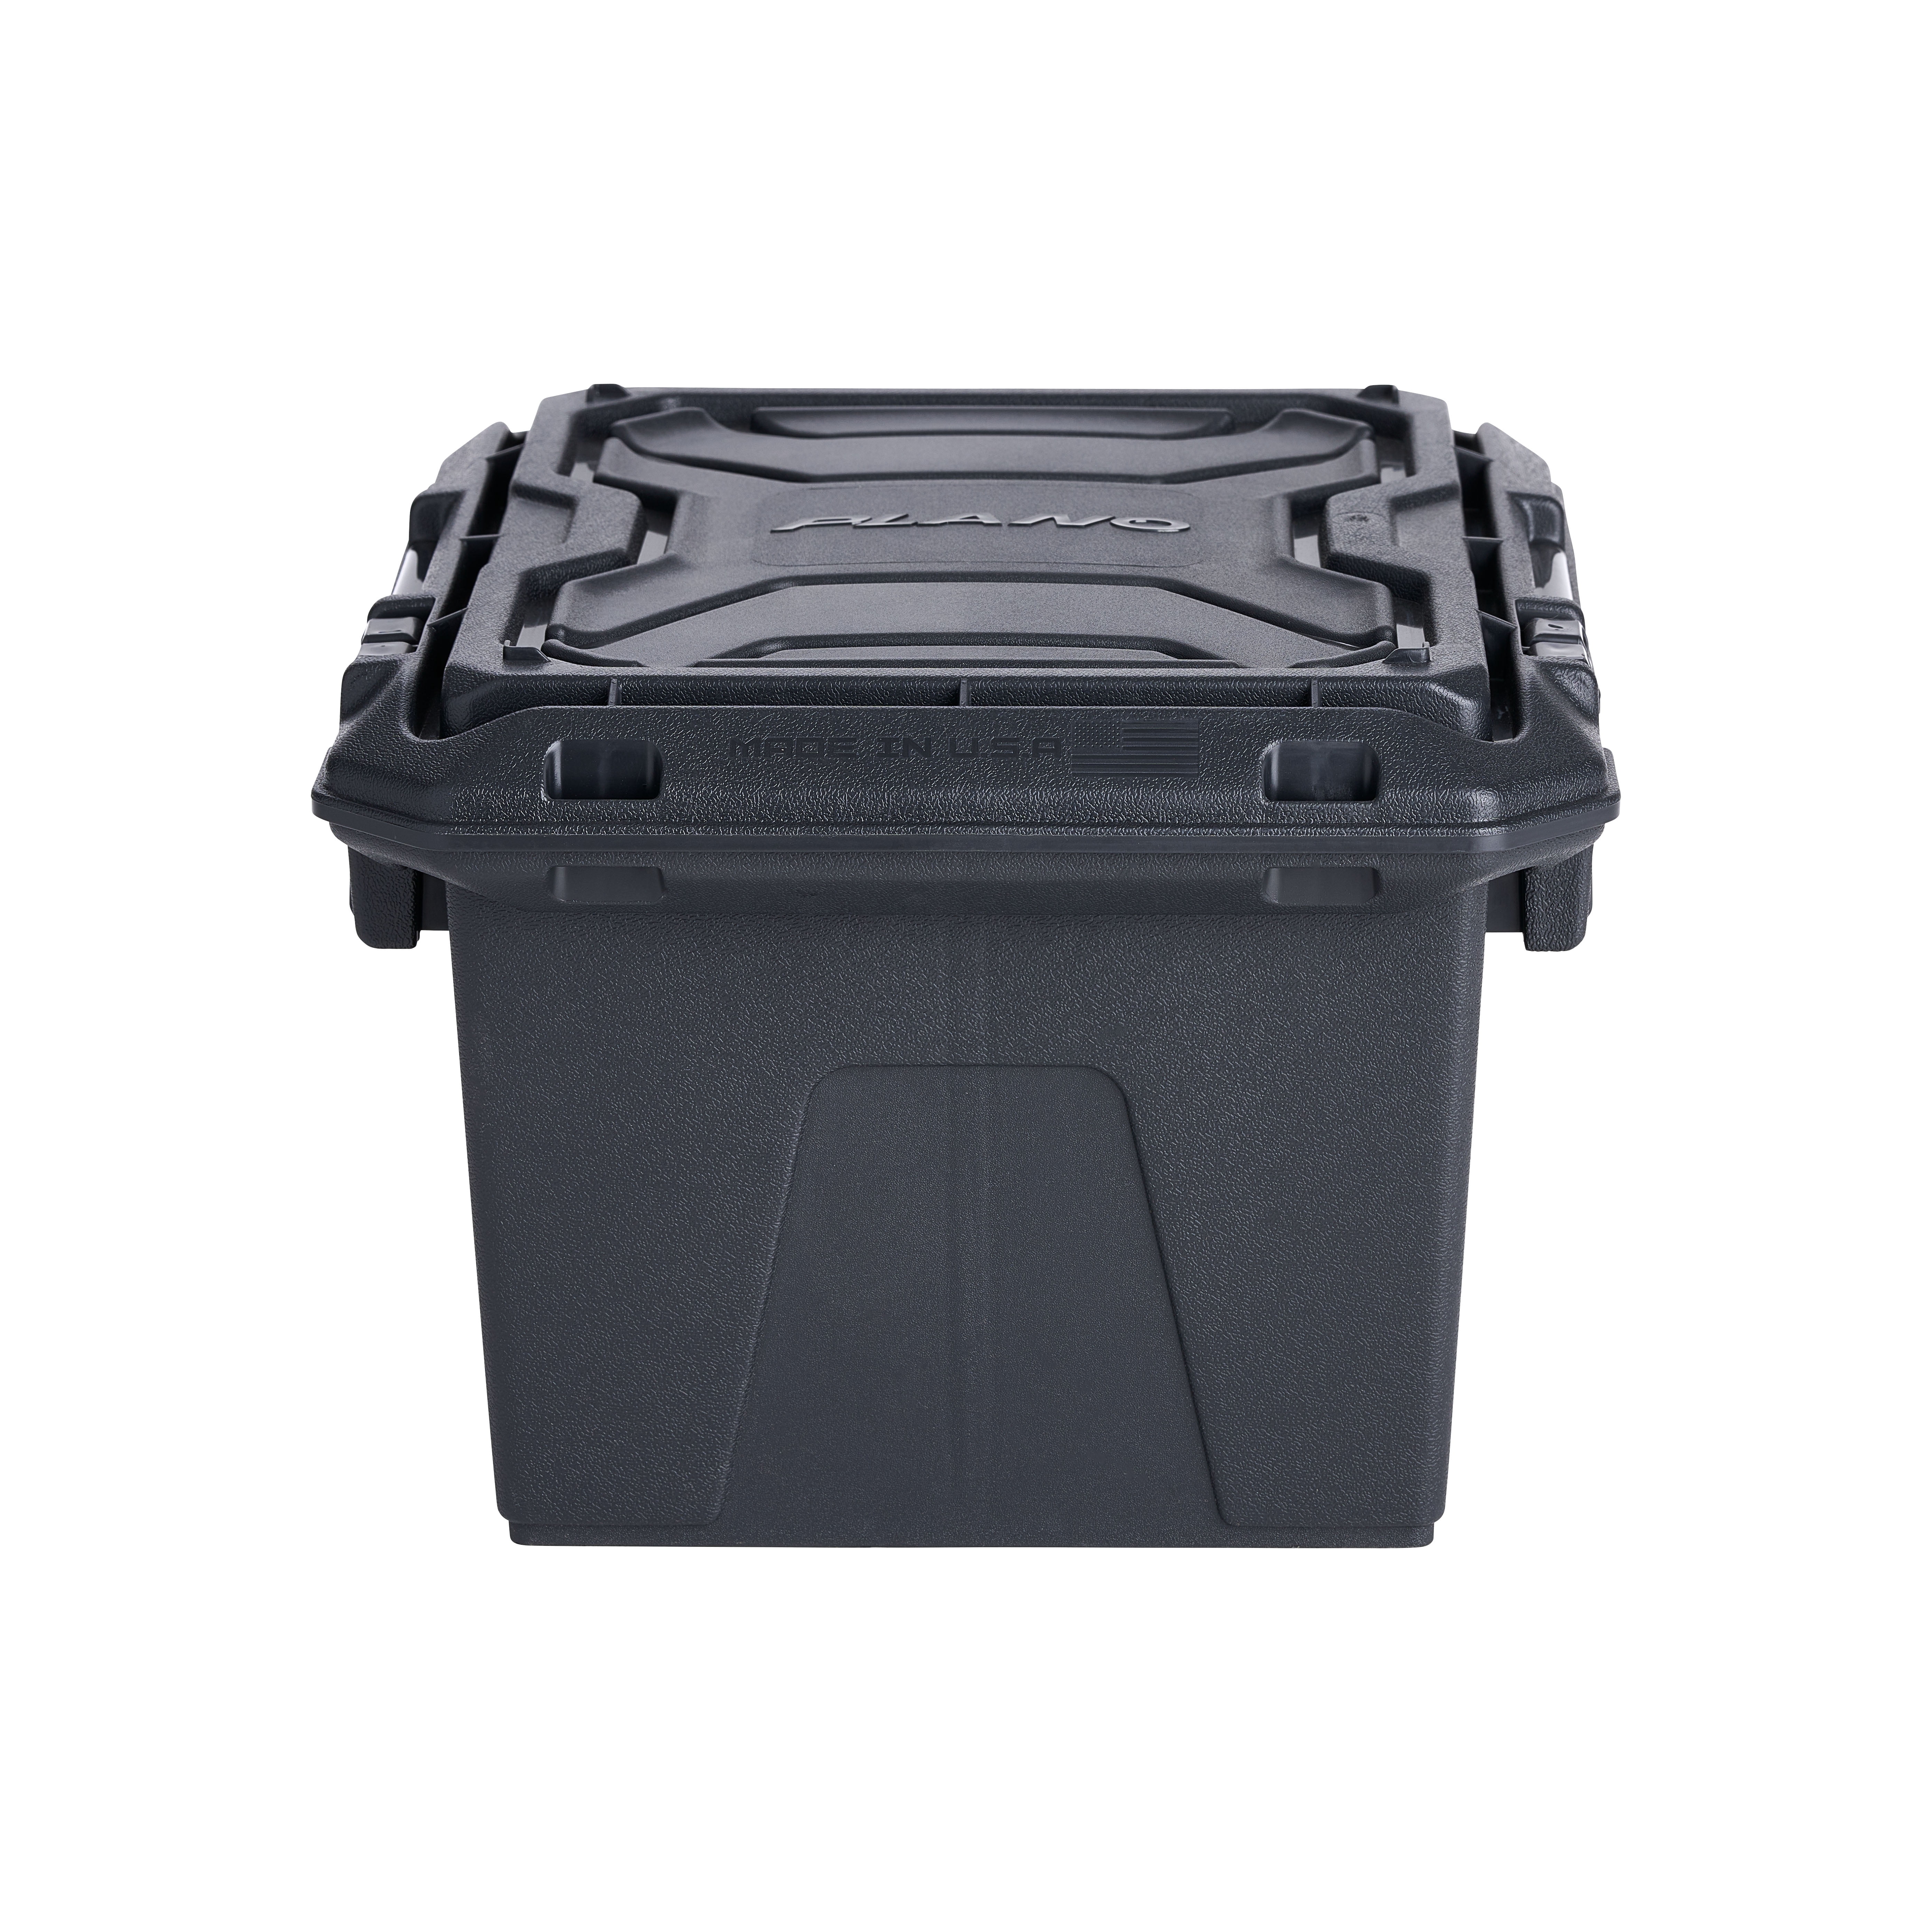 Plano Sportsman's Crate, Black, 16-Quart Lockable Storage Box